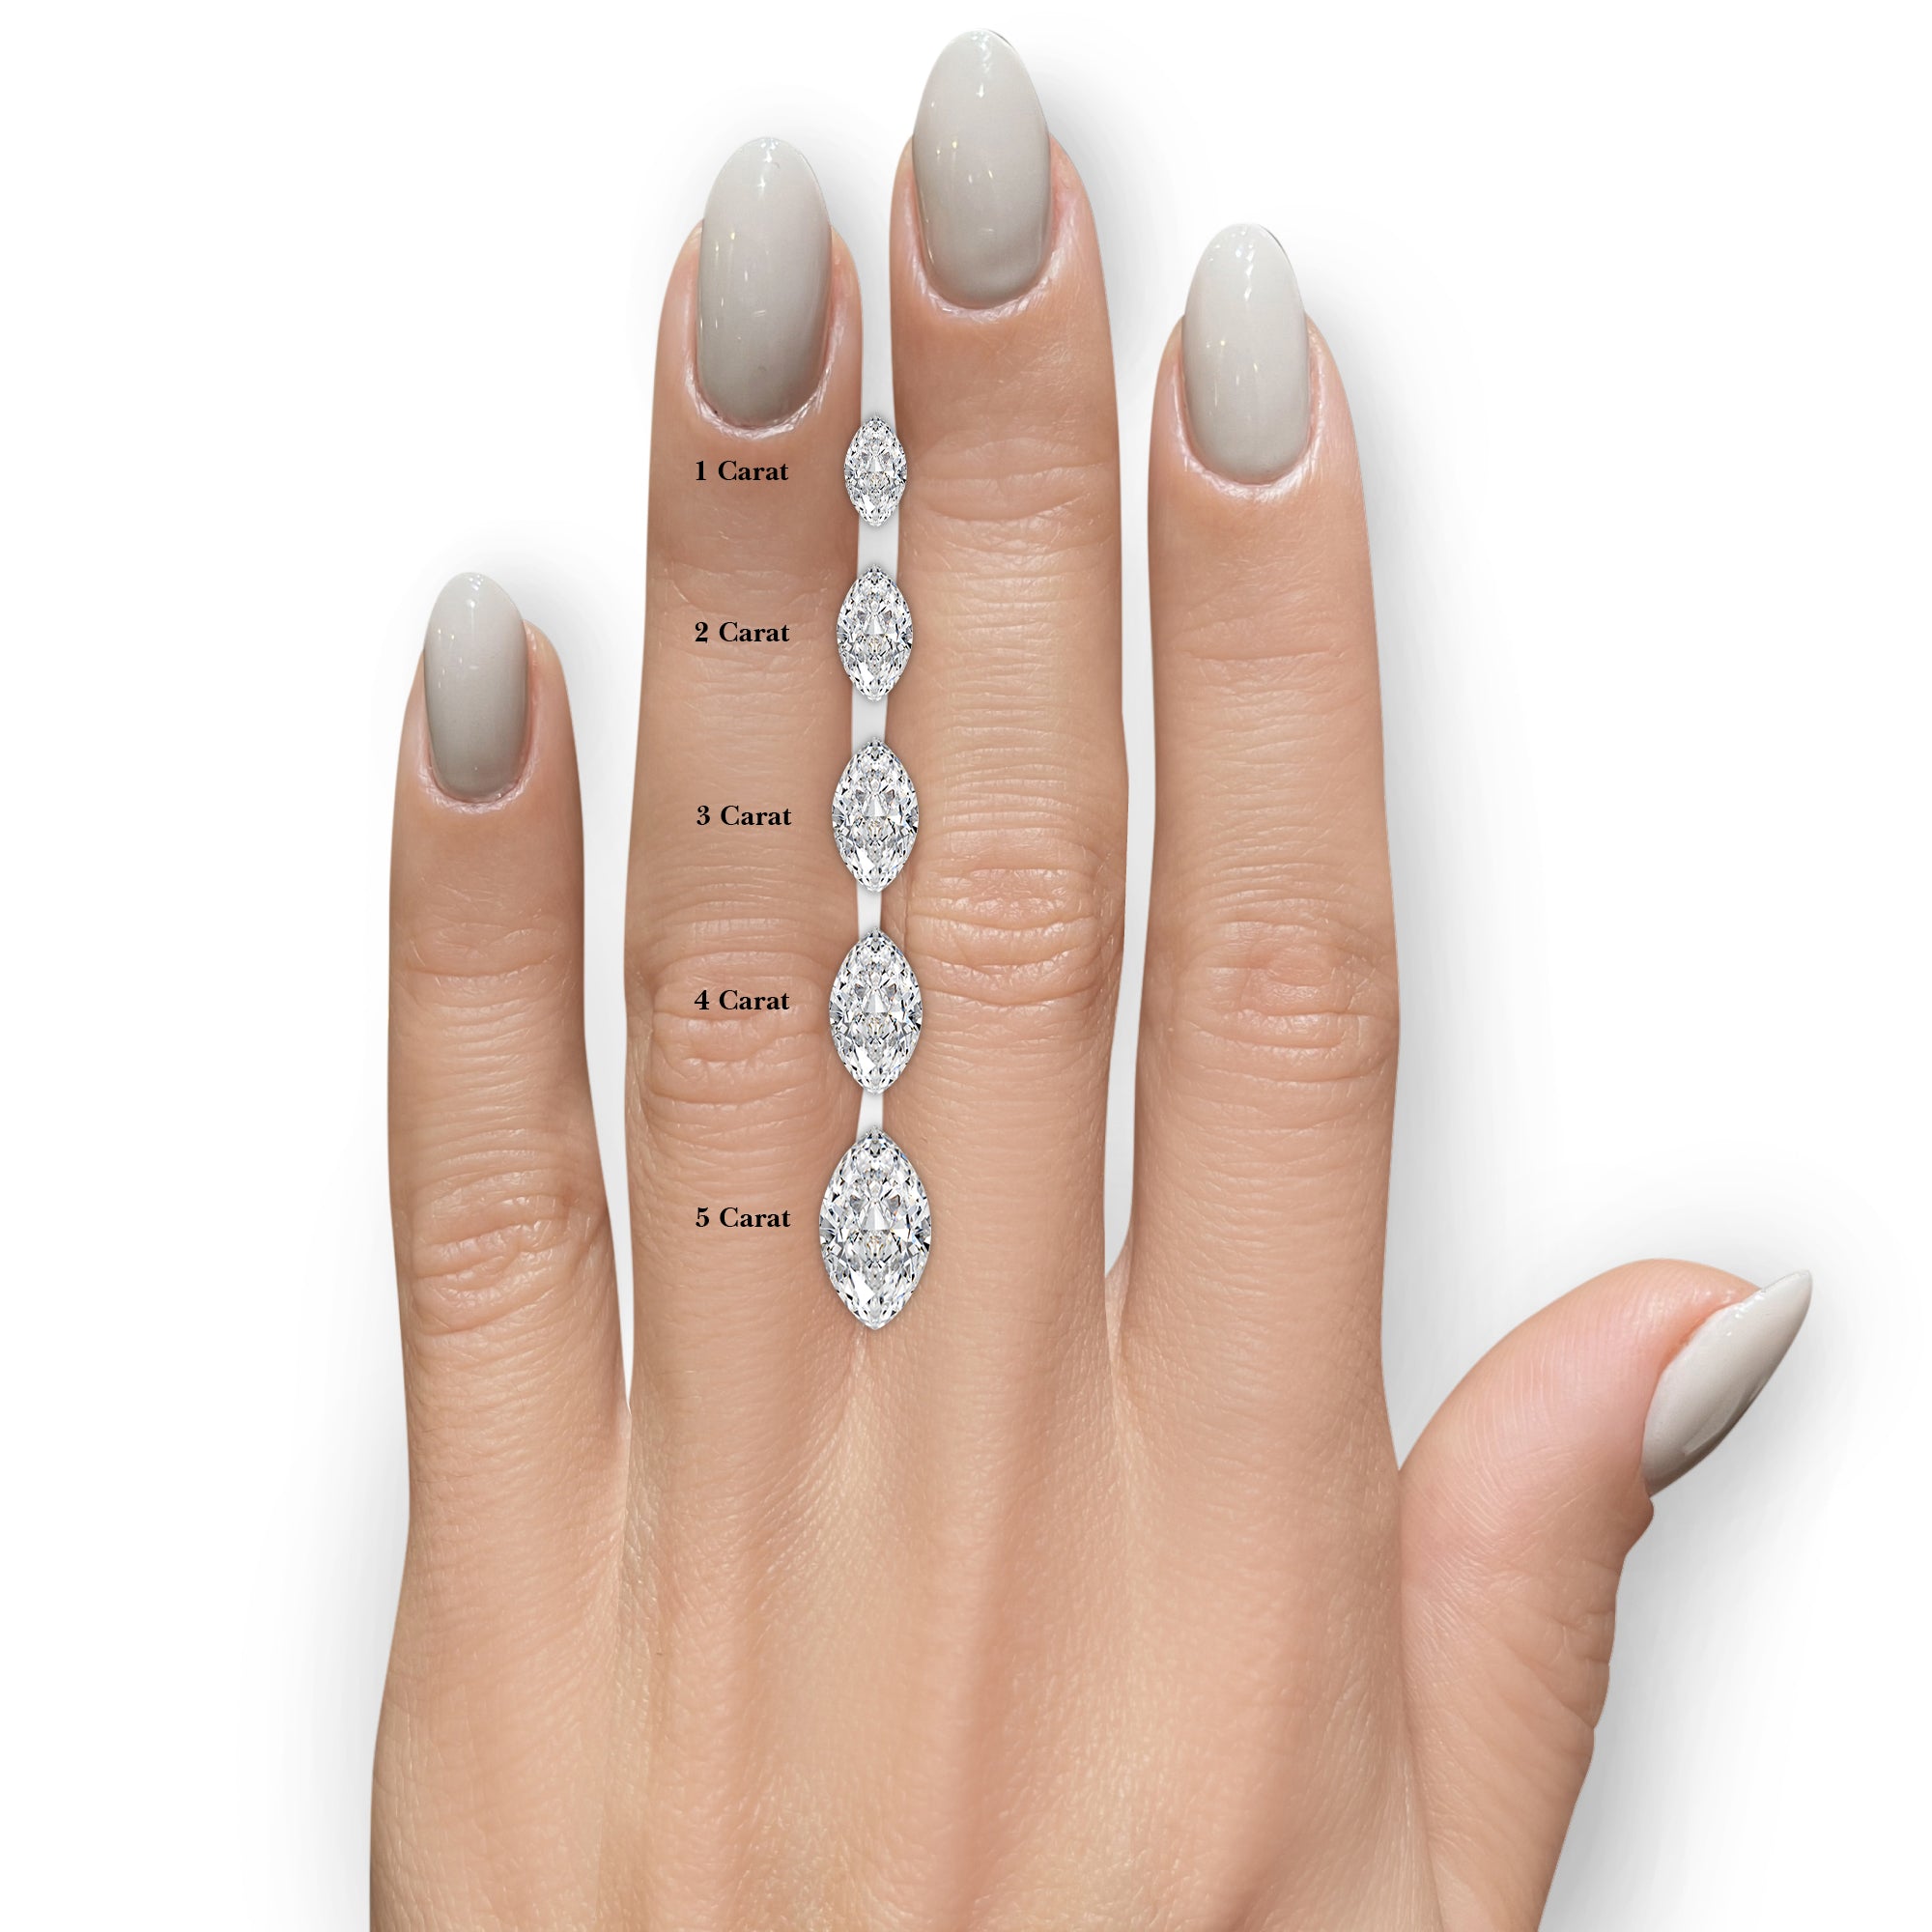 Tessa Diamond Engagement Ring -14K White Gold